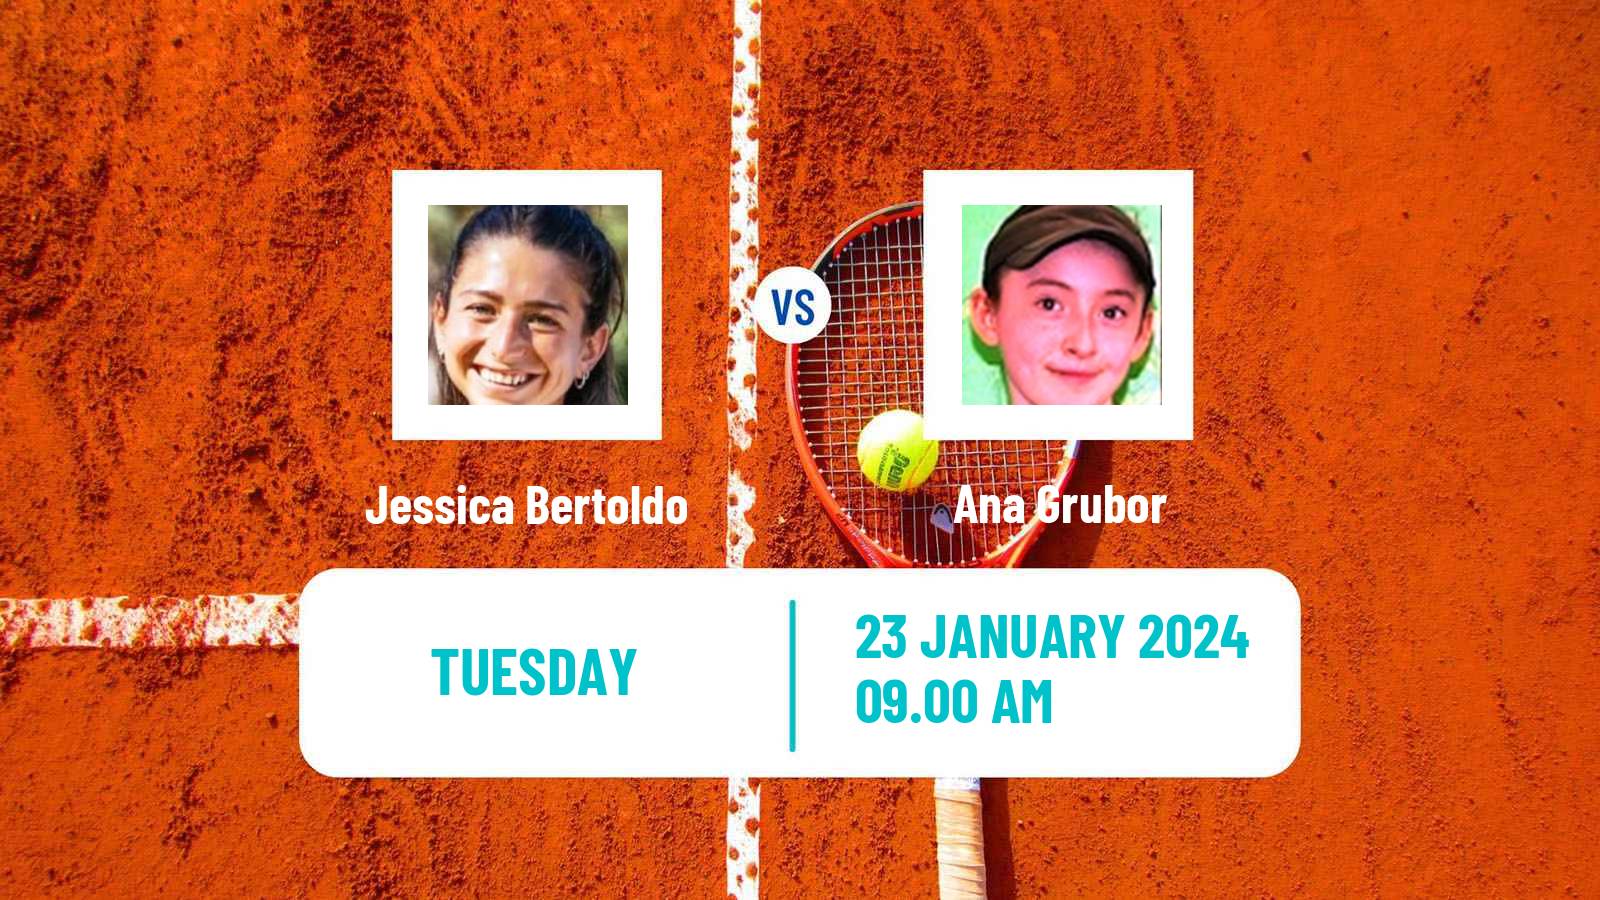 Tennis ITF W35 Buenos Aires 2 Women Jessica Bertoldo - Ana Grubor